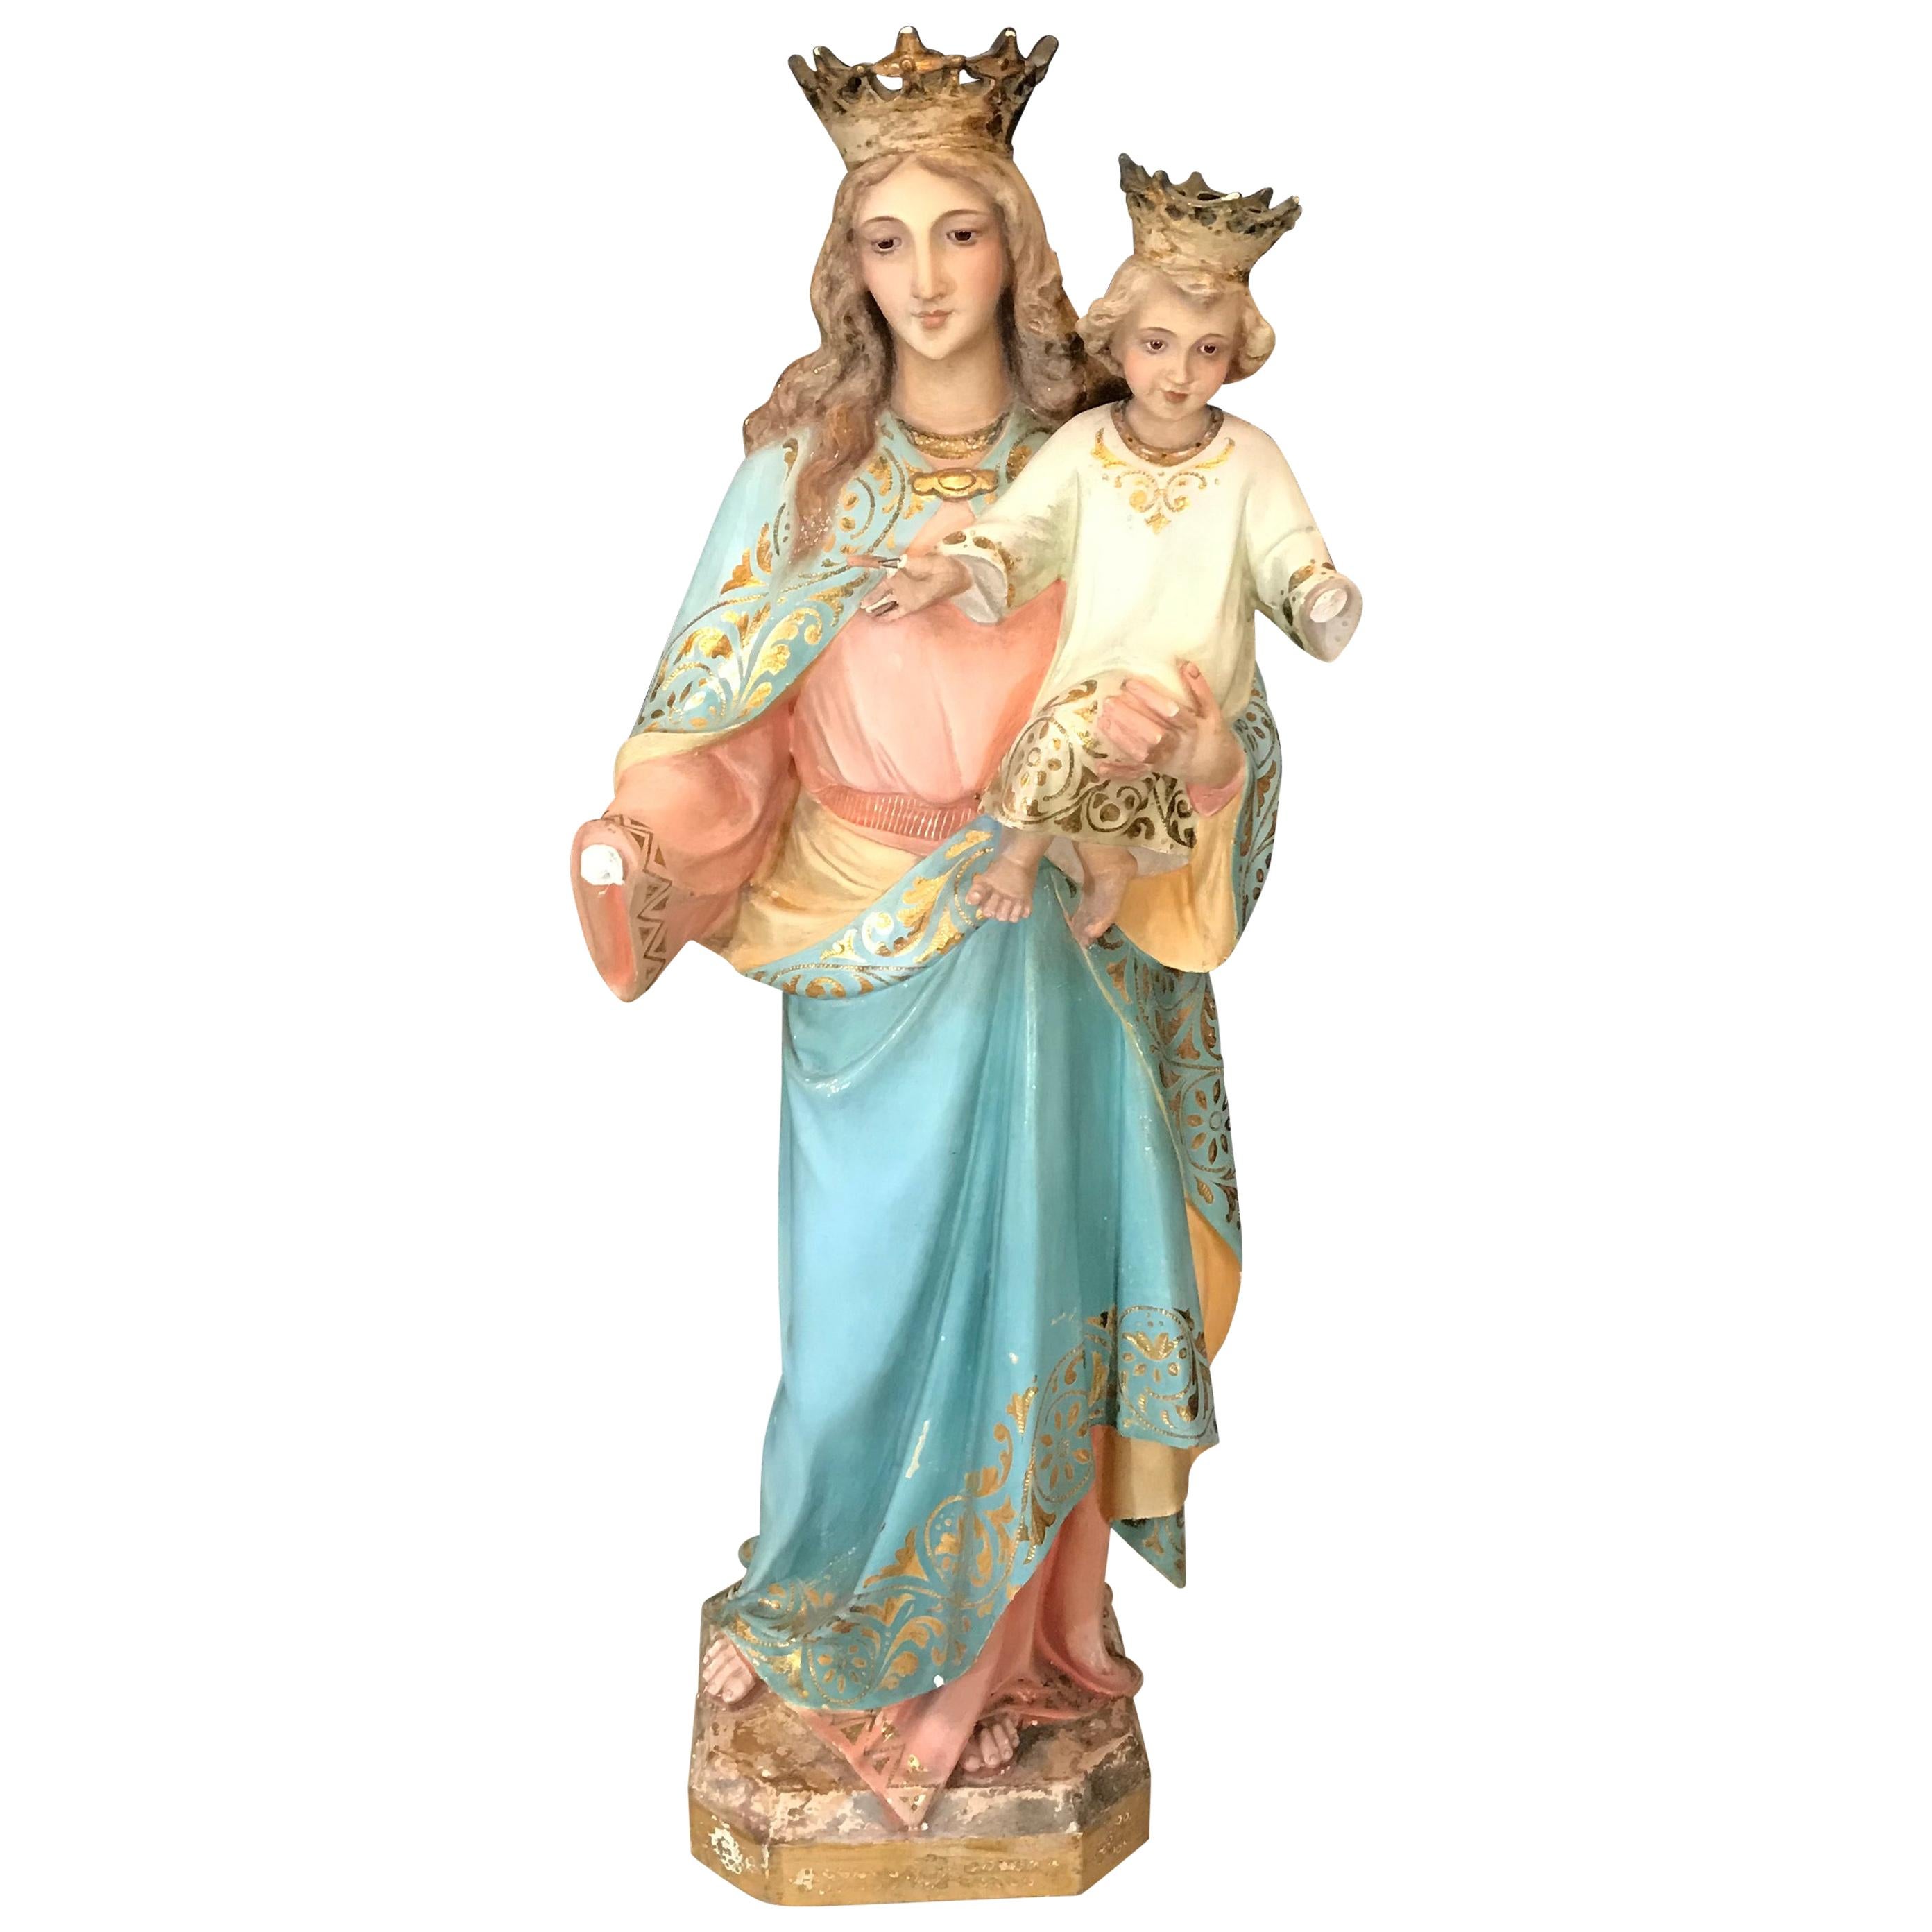 Magnificent Antique Santos Sculpture of St. Anne with Child